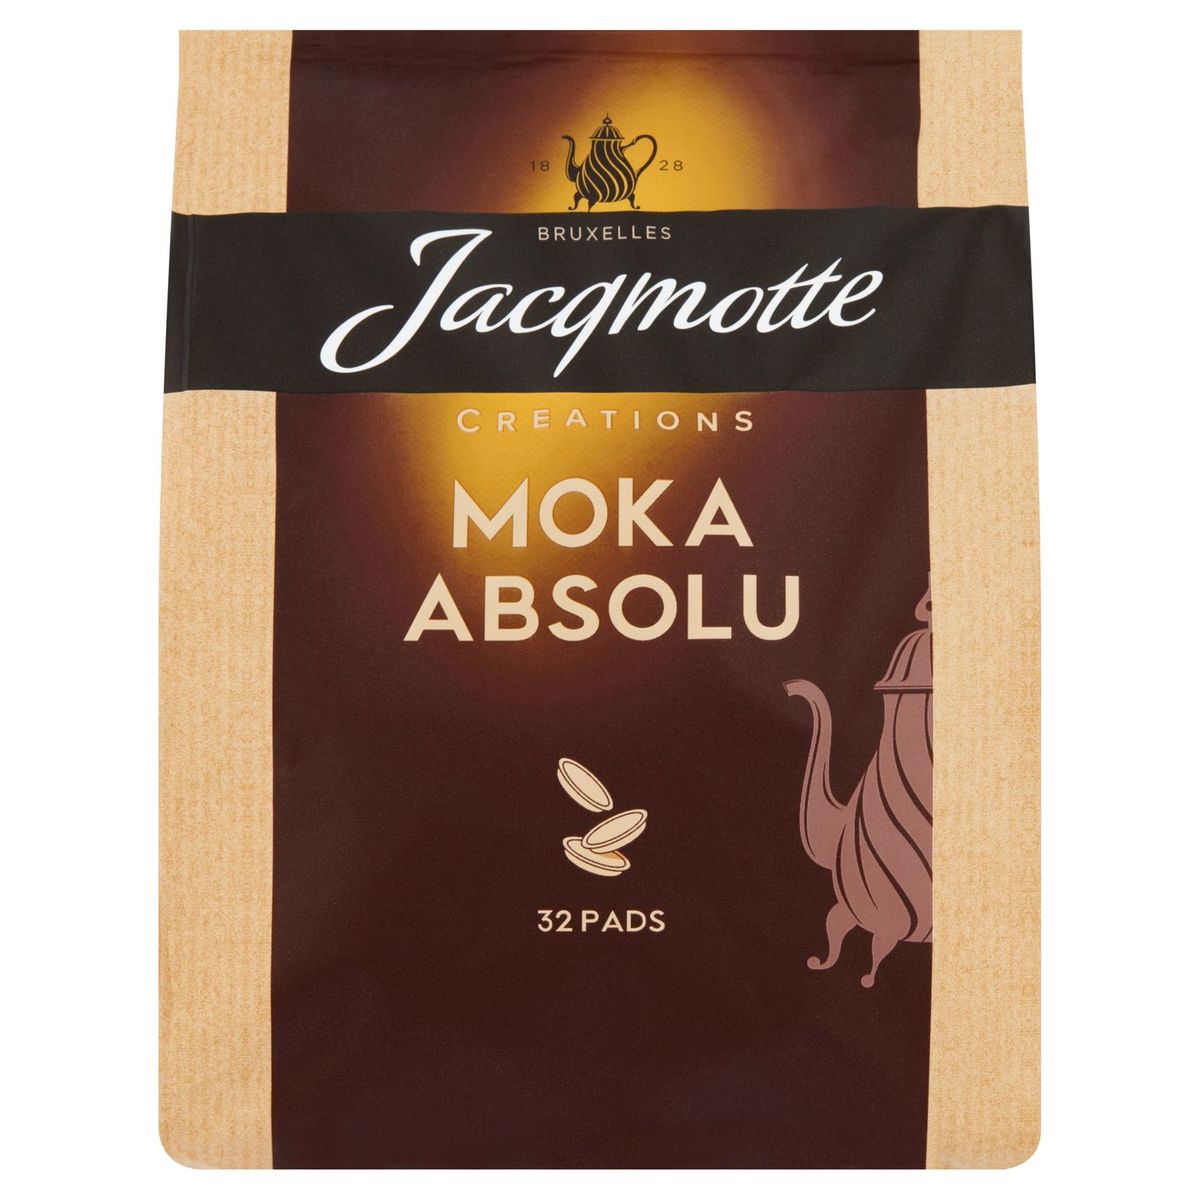 JACQMOTTE Koffie Pads Moka Absolu 32 stuks